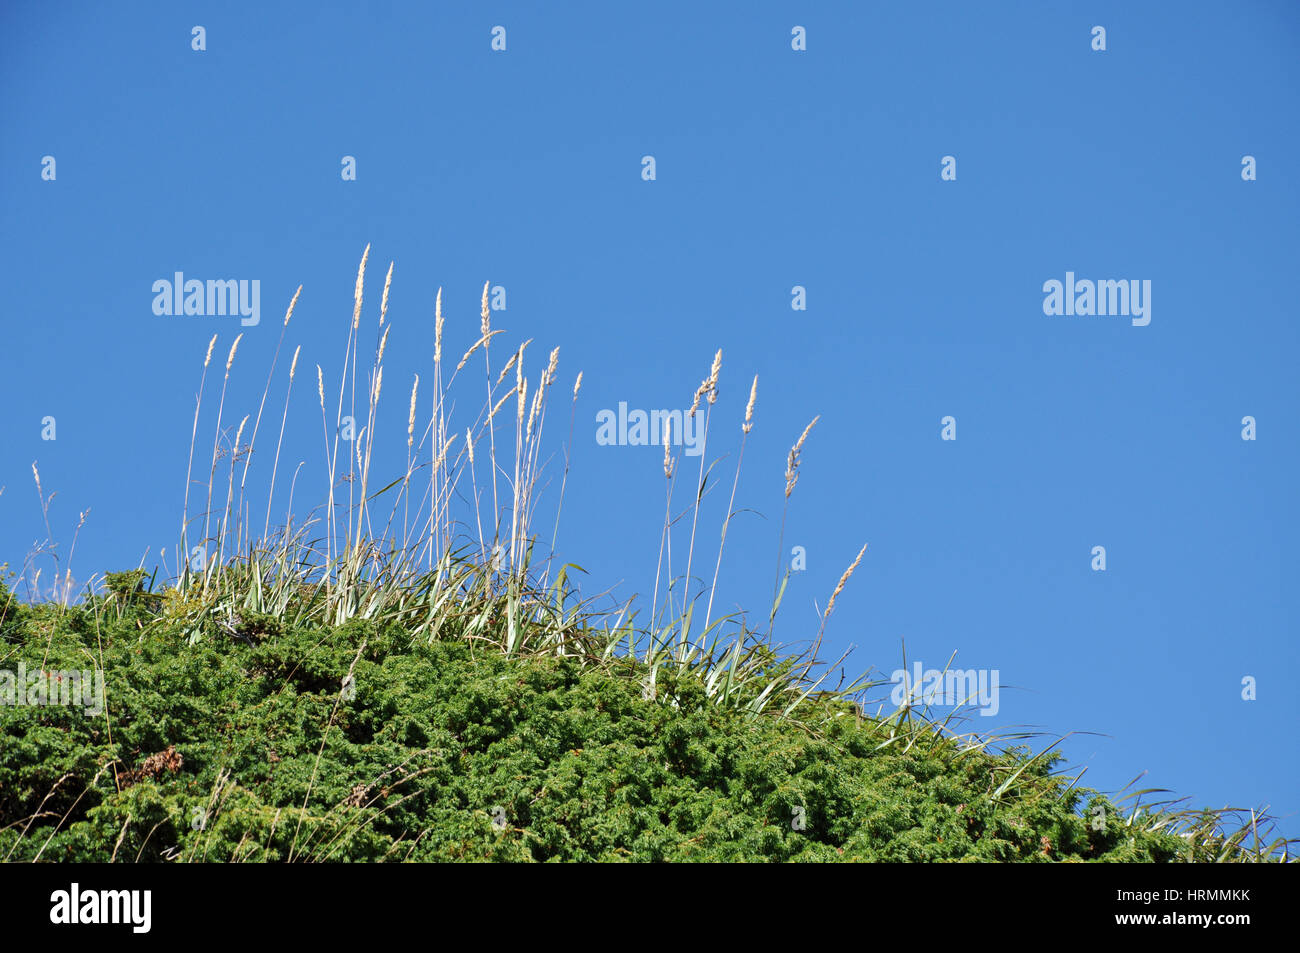 Summer plant against blue sky Stock Photo